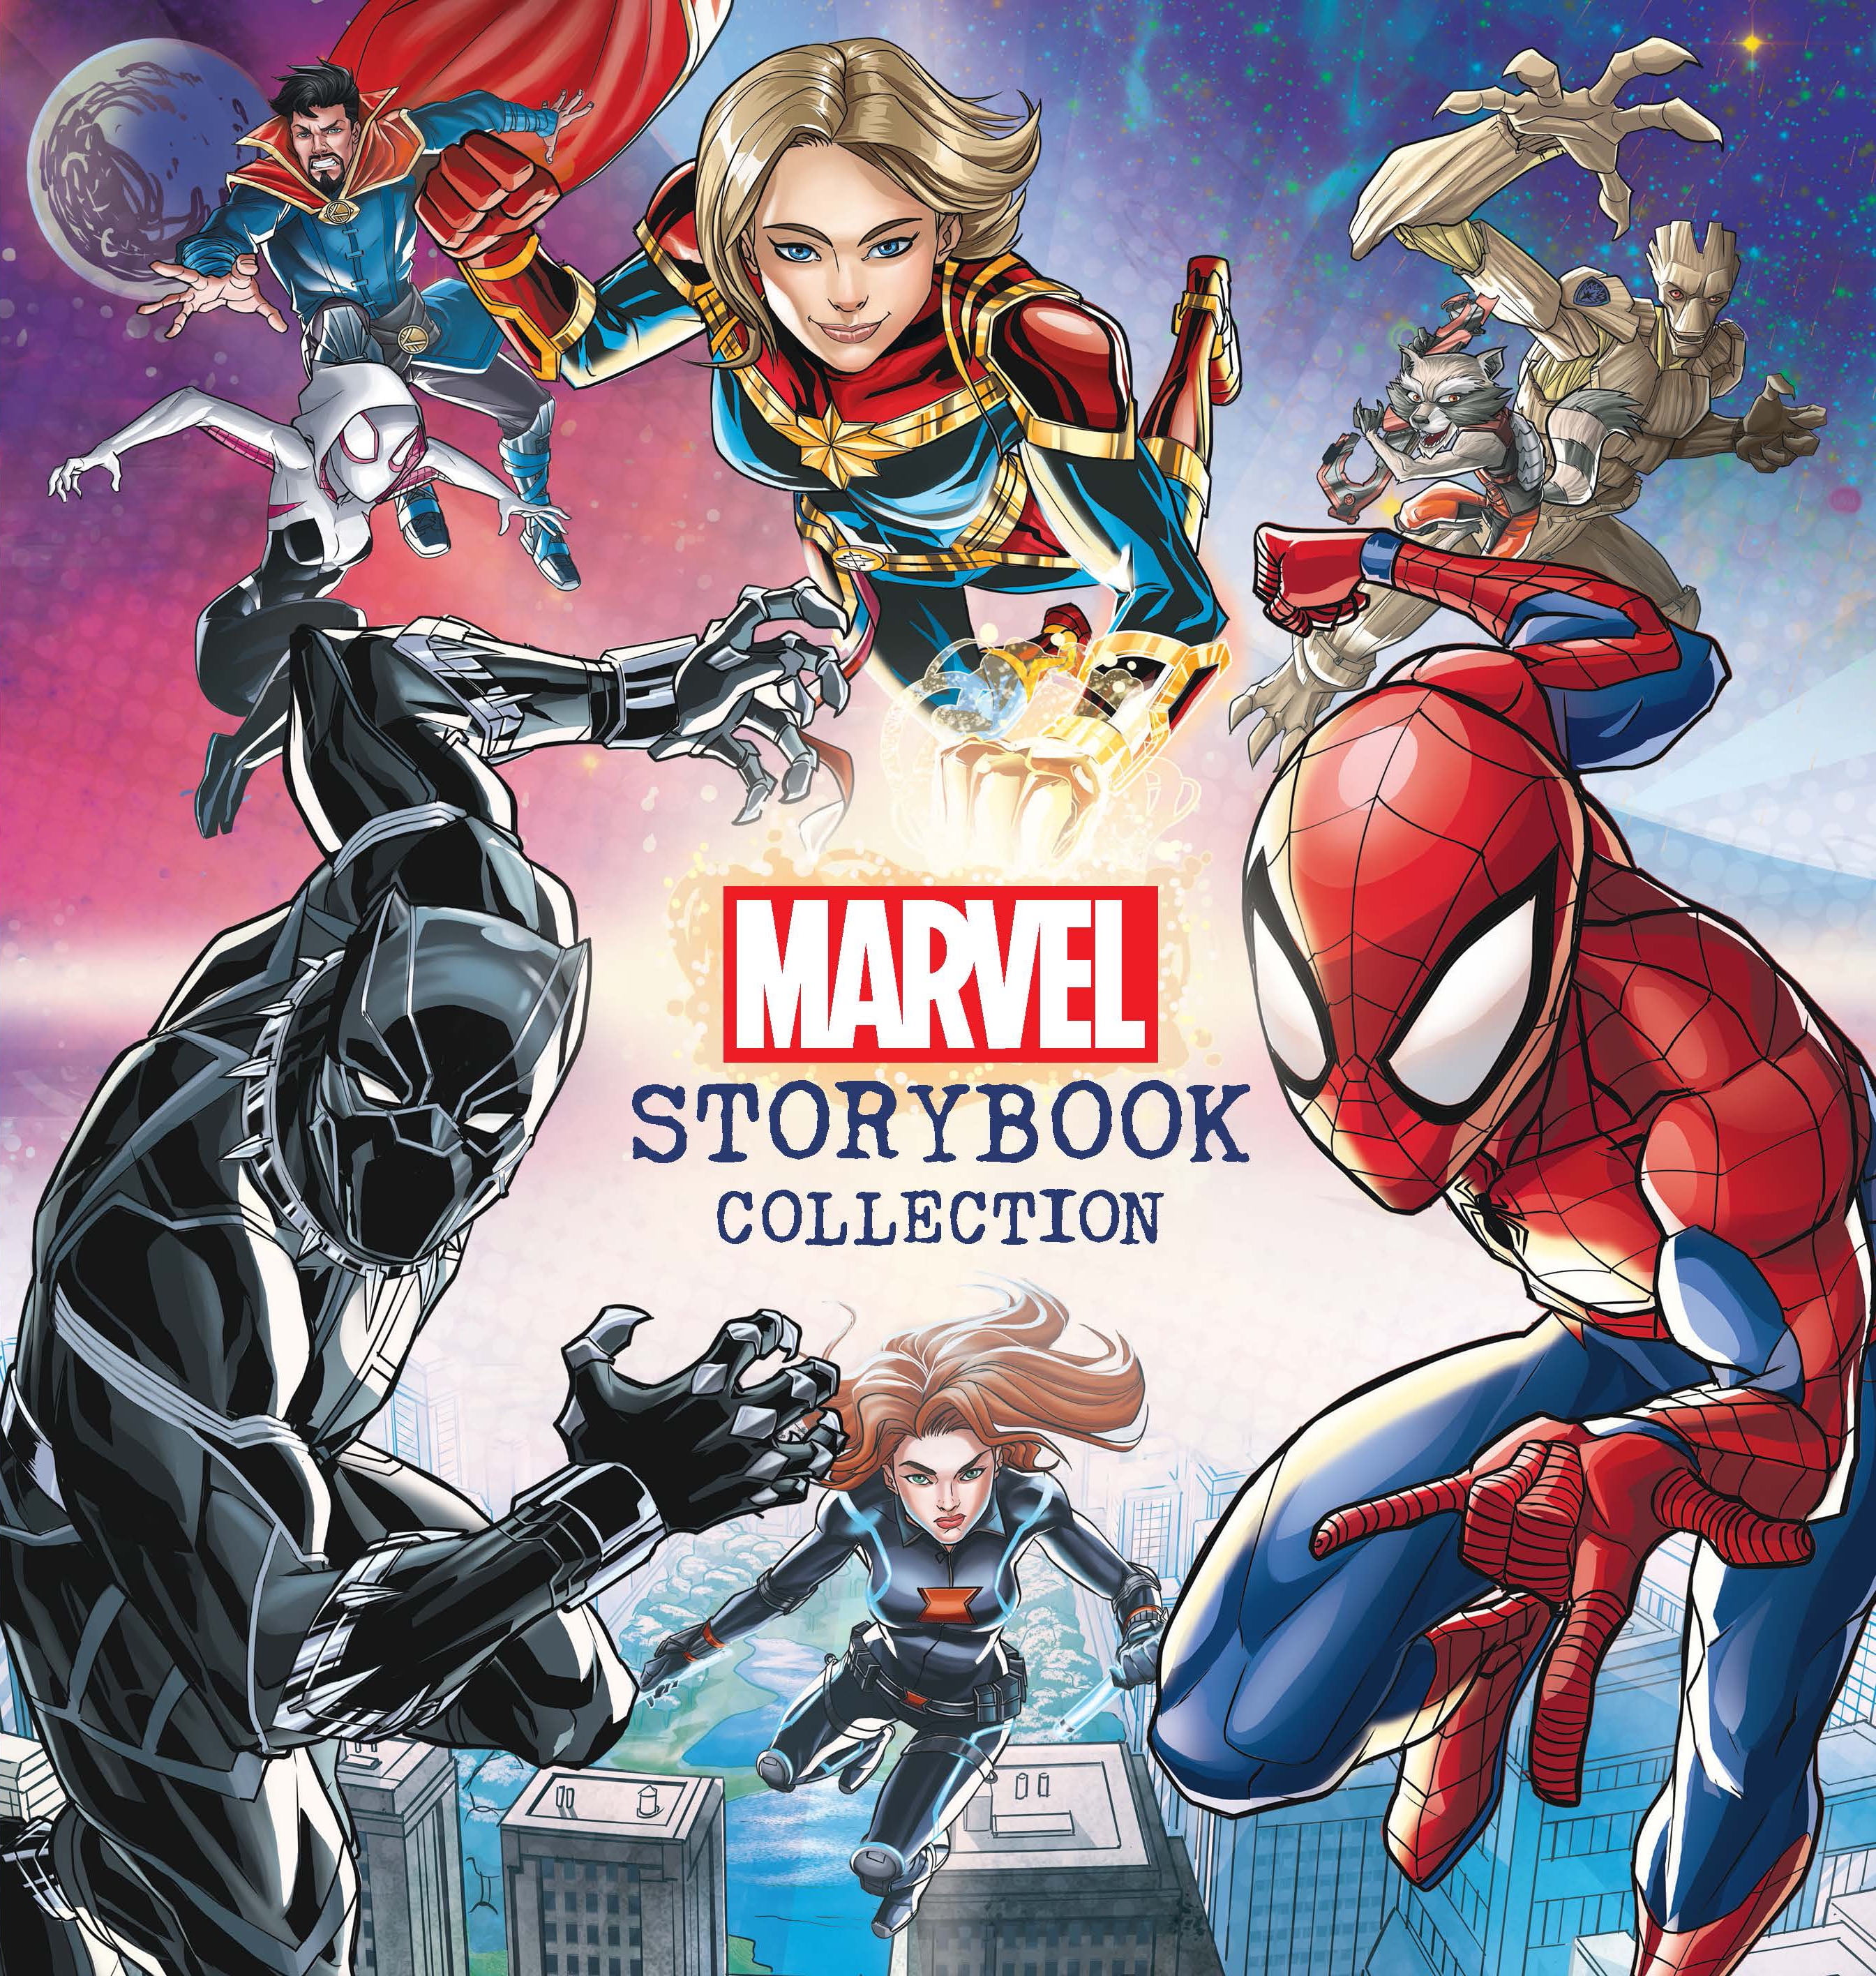 Marvel Storybook Collection - Walmart.com - Walmart.com